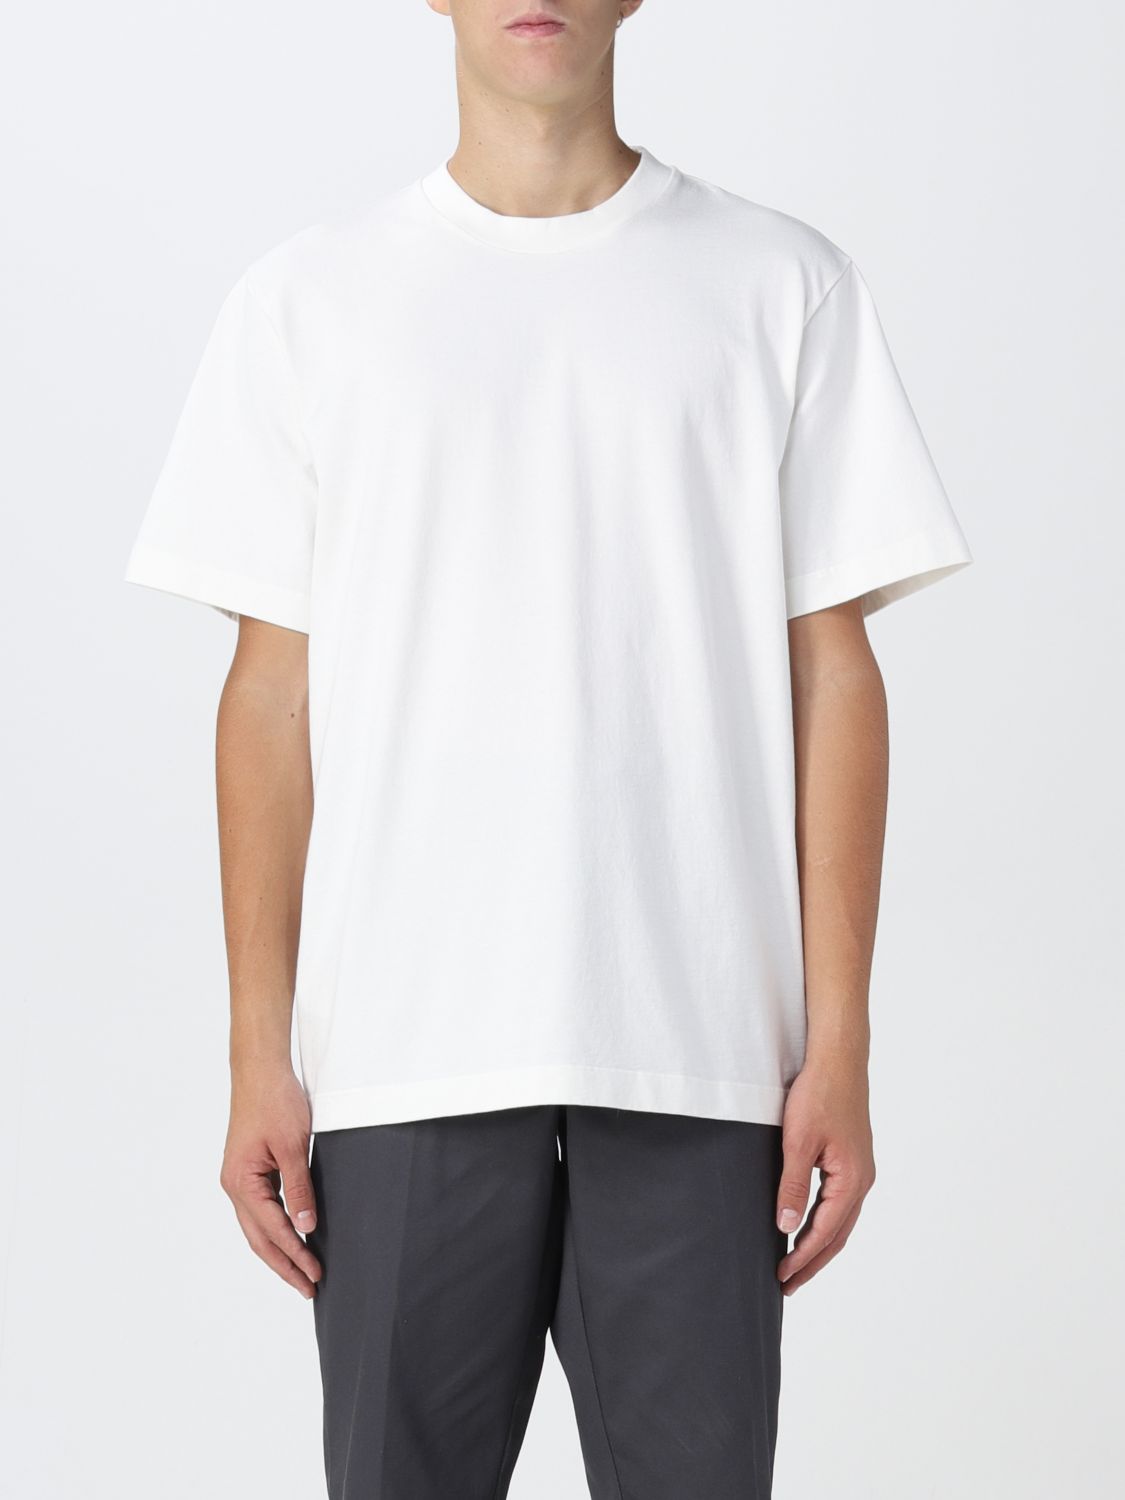 GRIFONI: t-shirt for man - White | Grifoni t-shirt GJ18003655 online on ...